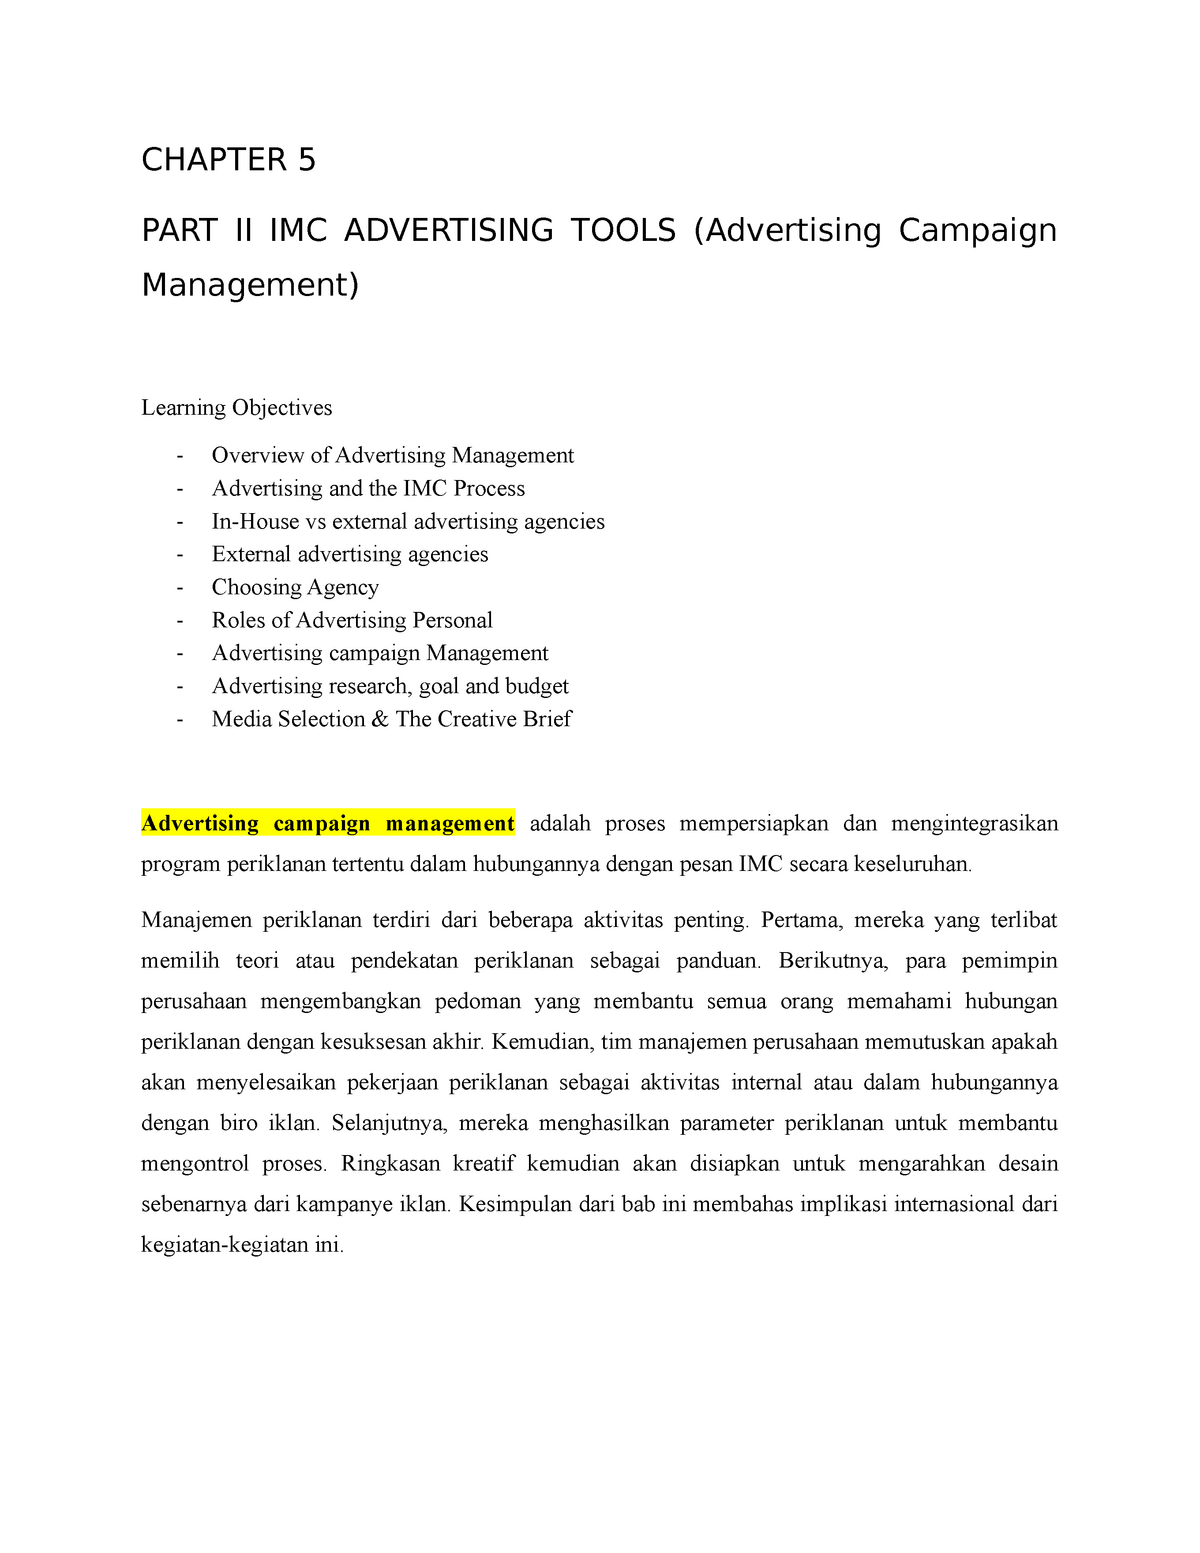 Resume Chapter 5 Its About Marketing Communication Chapter 5 Part Ii Imc Advertising Tools Studocu